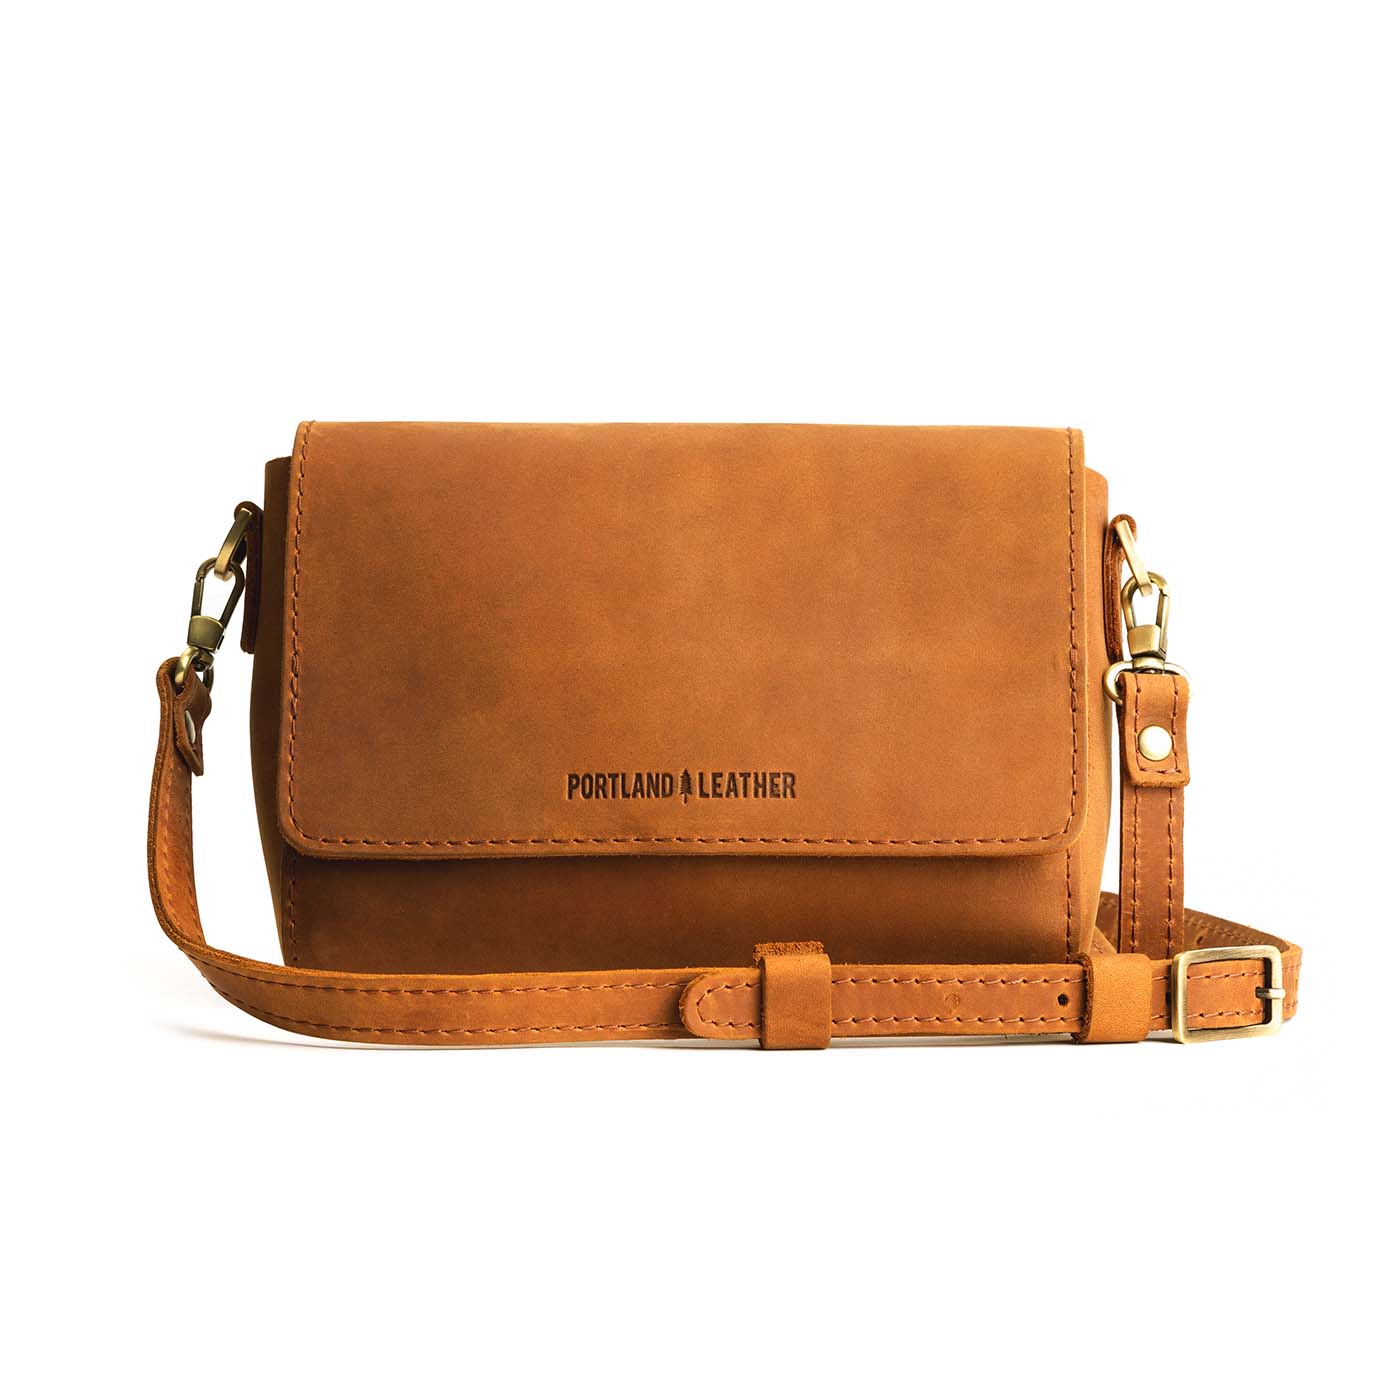 Handbag Vs Backpack - Which Is Best For Work? – Zatchels